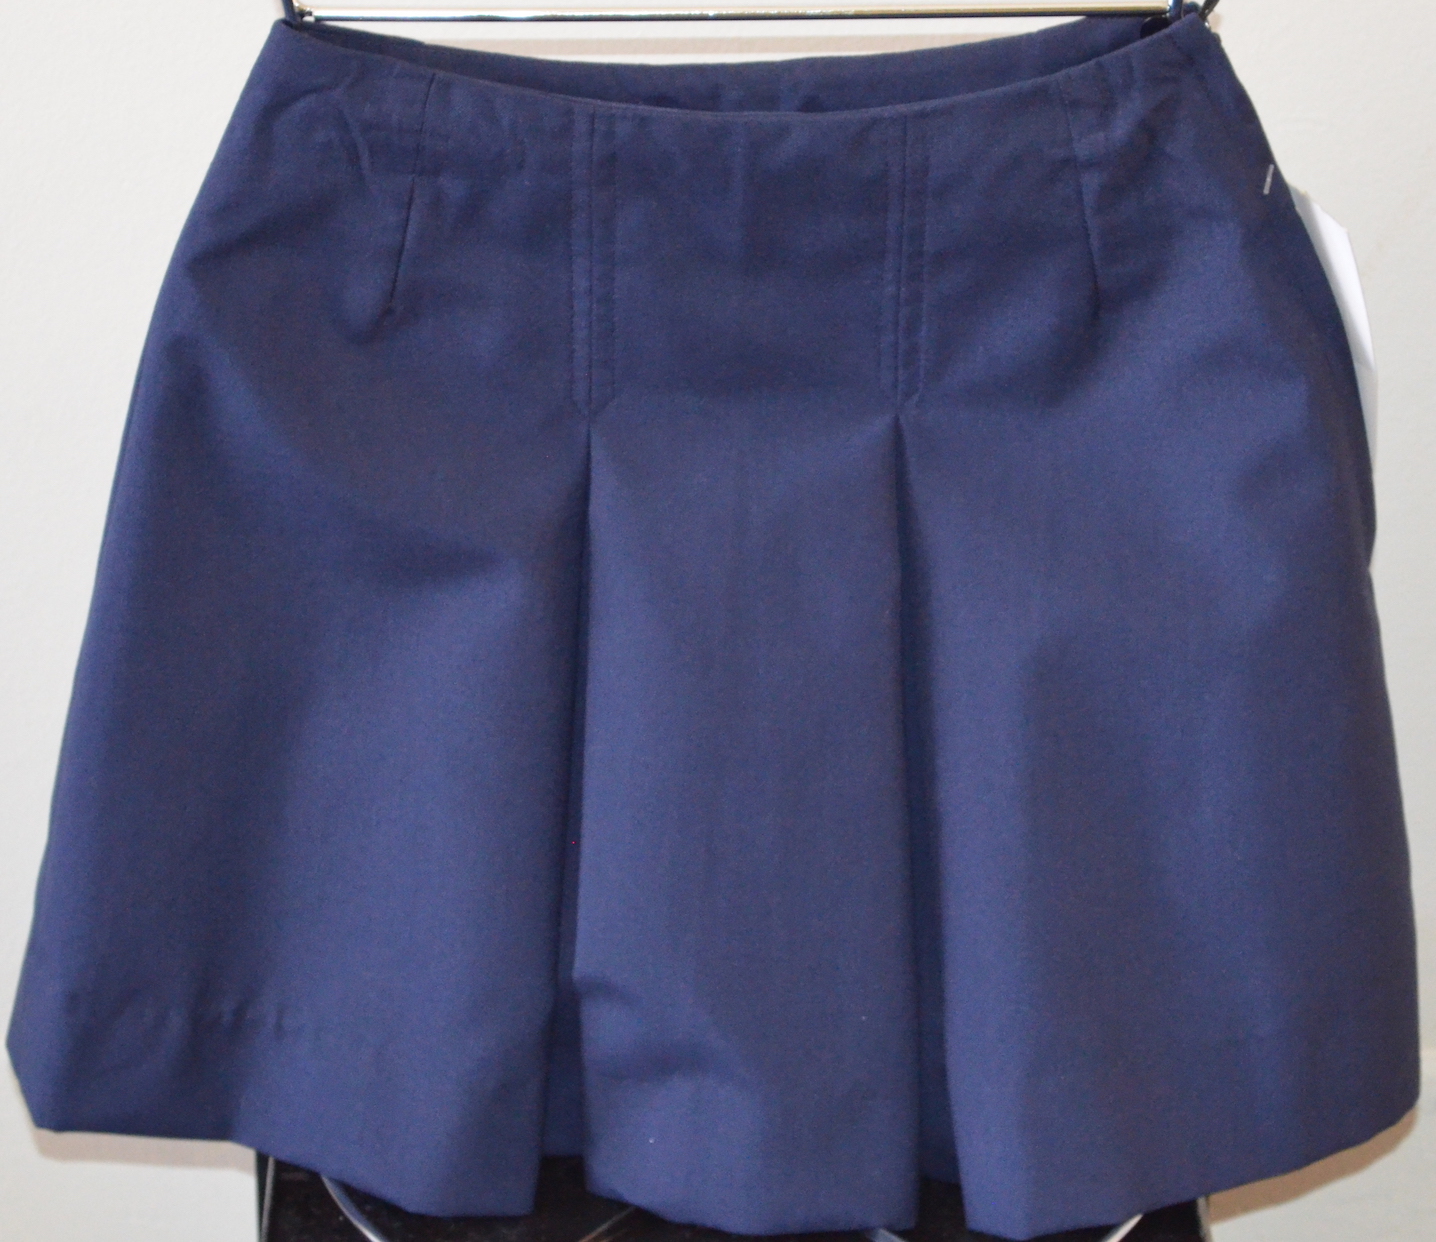 Junior Navy Pleated skirt.